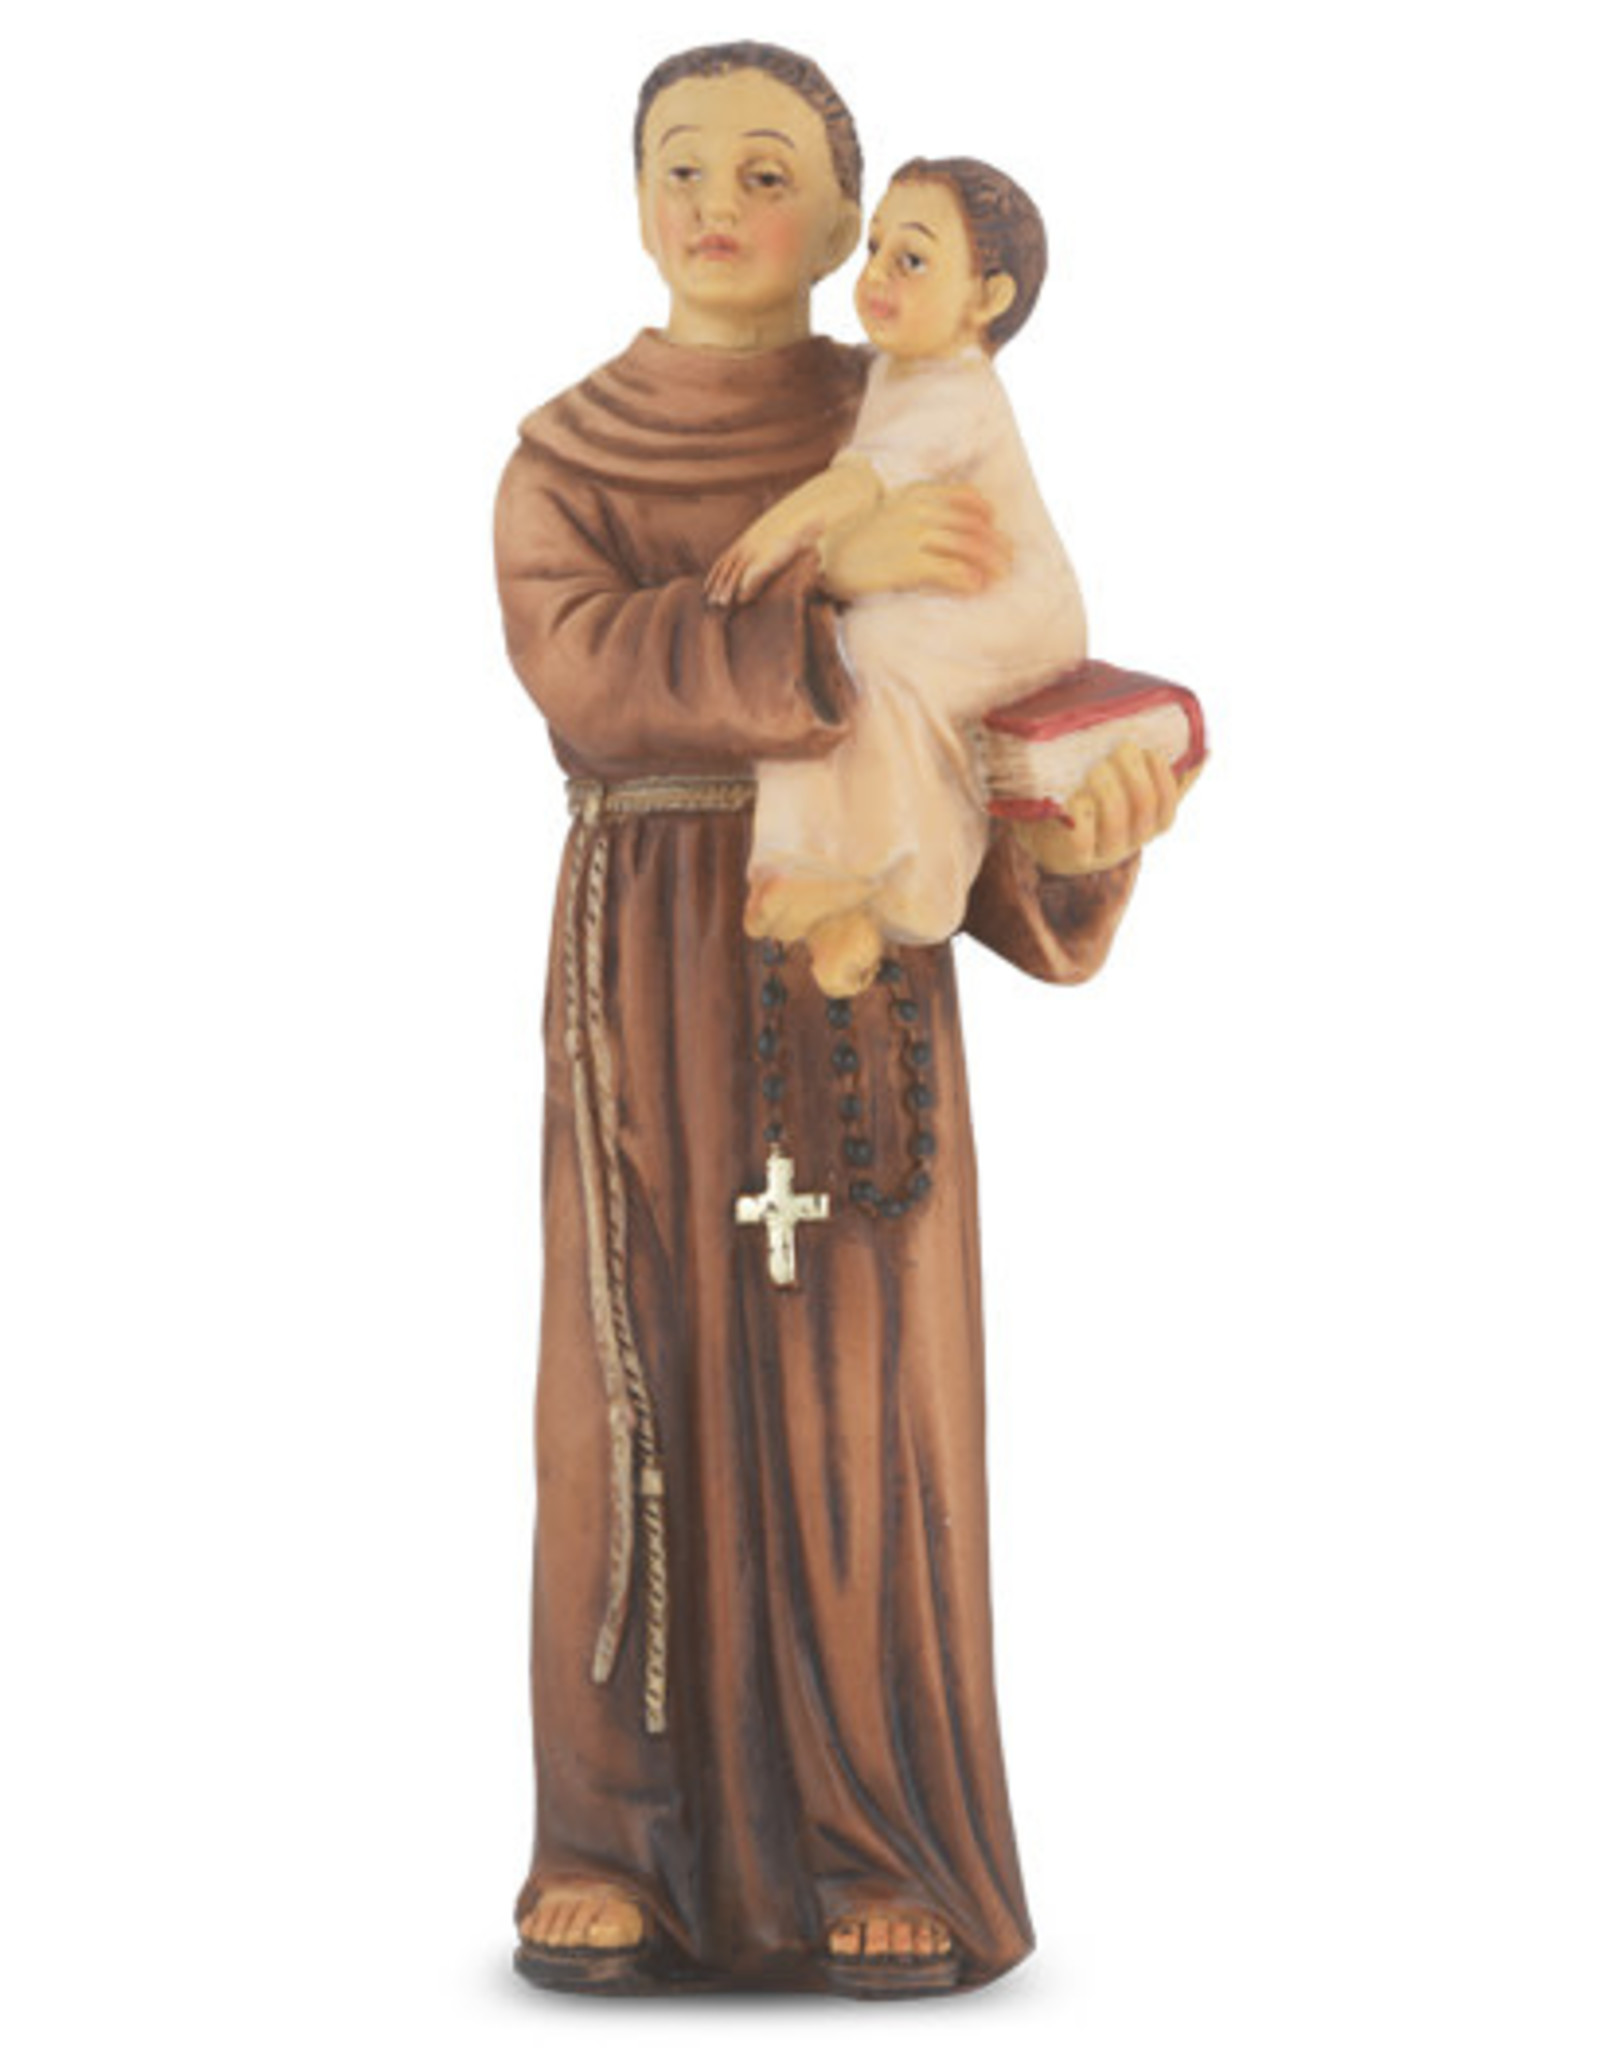 Hirten Patron Saint Statue - St. Anthony of Padua